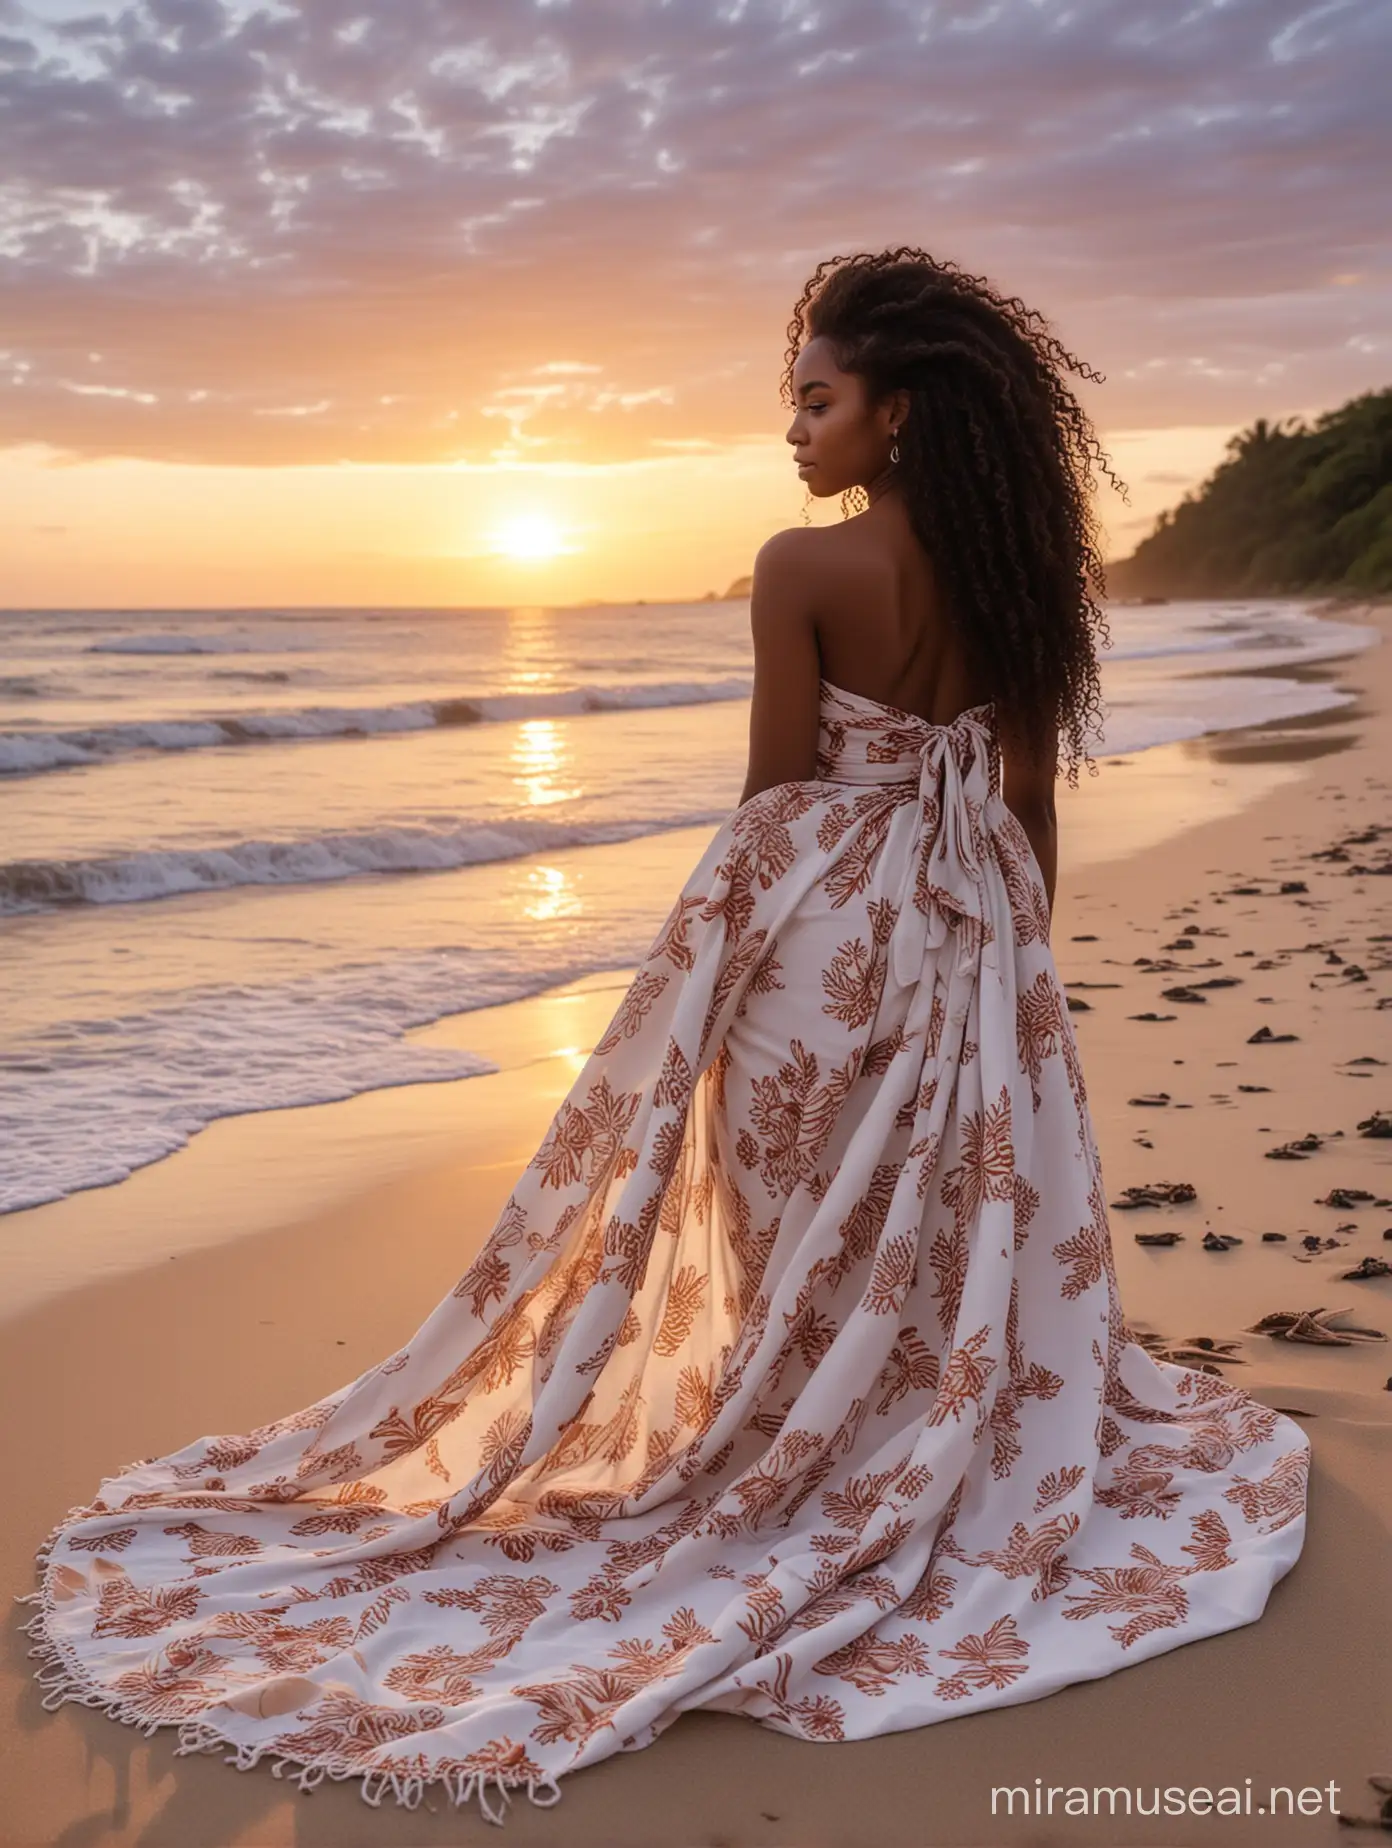 Beautiful Black Girl on Sandy Beach with Shells at Twilight